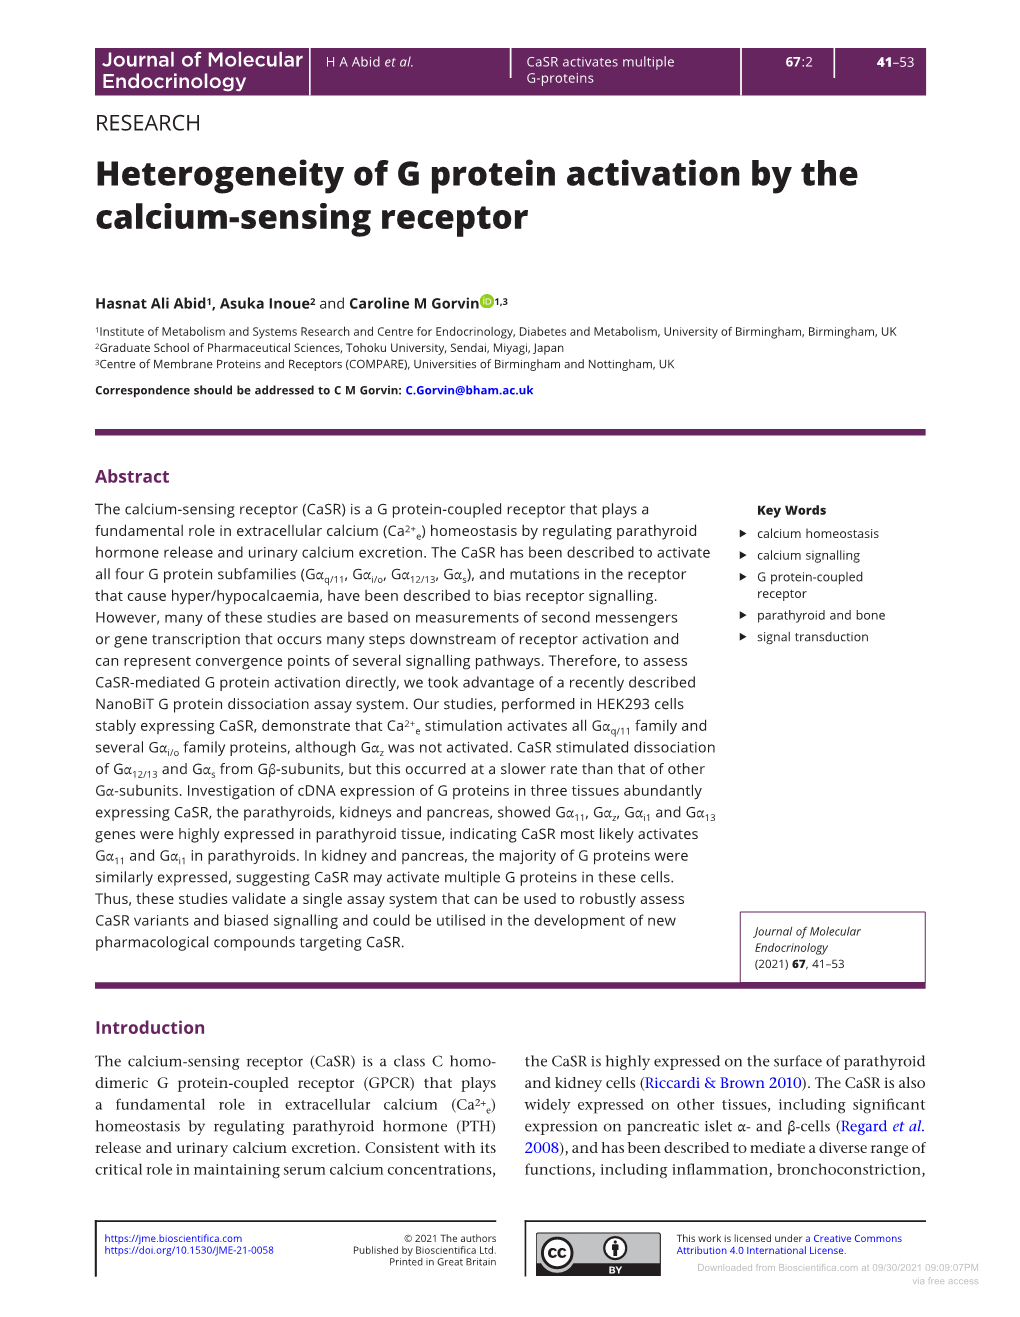 Heterogeneity of G Protein Activation by the Calcium-Sensing Receptor